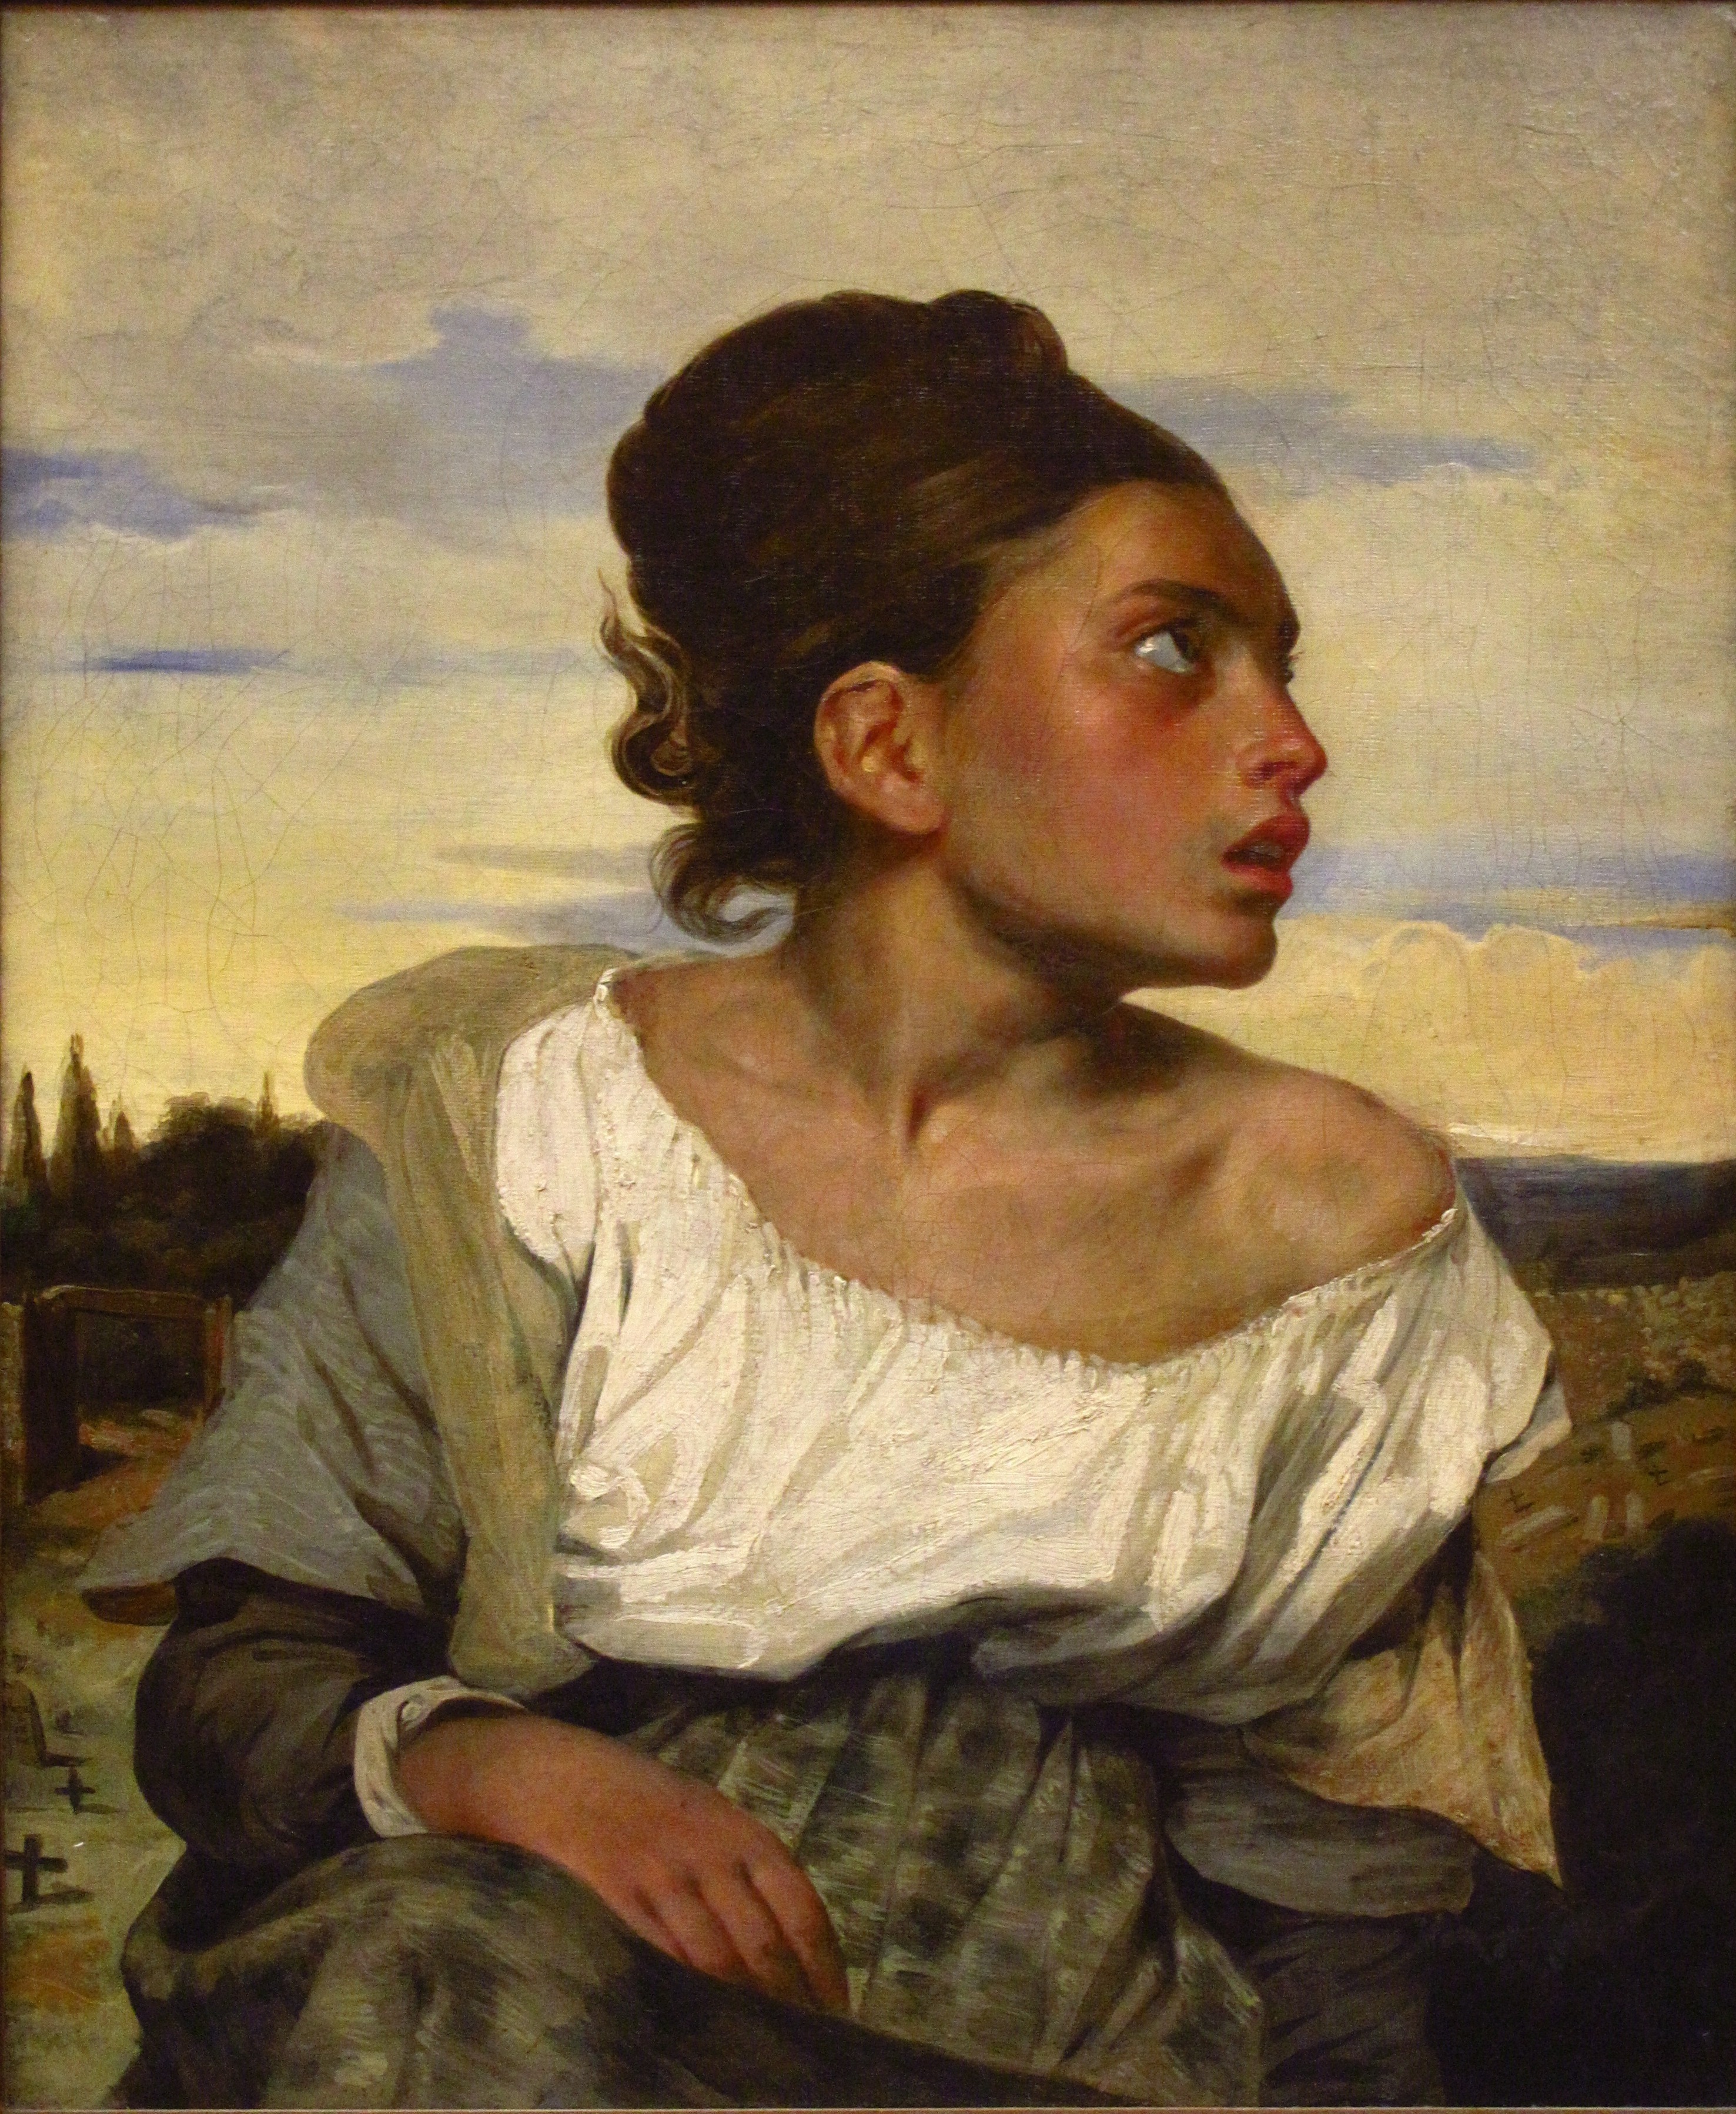 Mezarlıktaki Genç Yetim Kız by Eugène Delacroix - 1824 Musée du Louvre